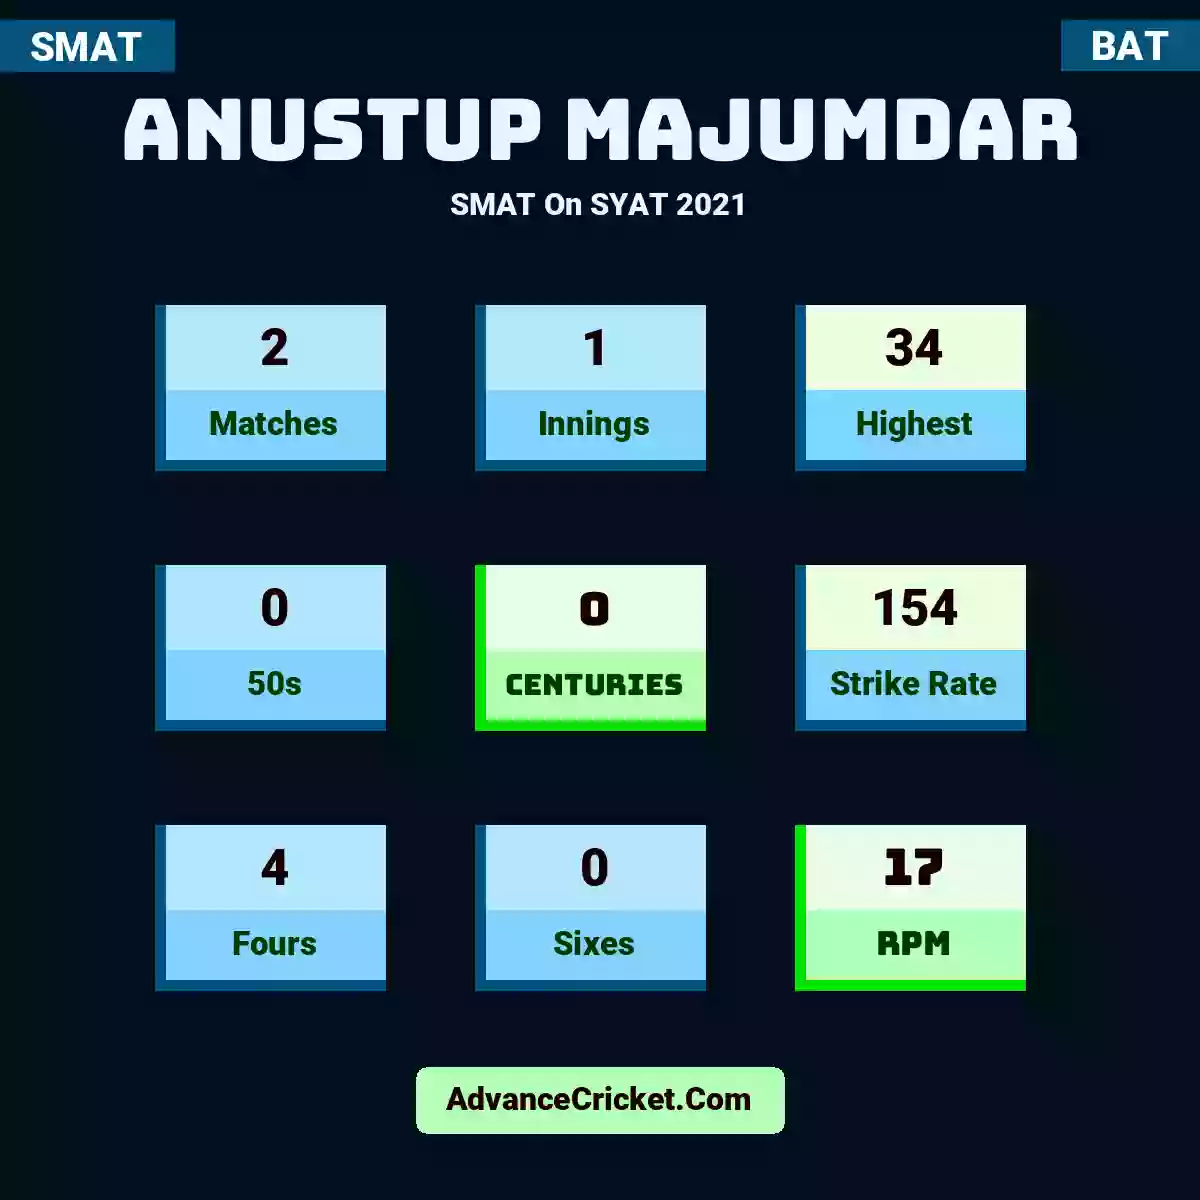 Anustup Majumdar SMAT  On SYAT 2021, Anustup Majumdar played 2 matches, scored 34 runs as highest, 0 half-centuries, and 0 centuries, with a strike rate of 154. A.Majumdar hit 4 fours and 0 sixes, with an RPM of 17.